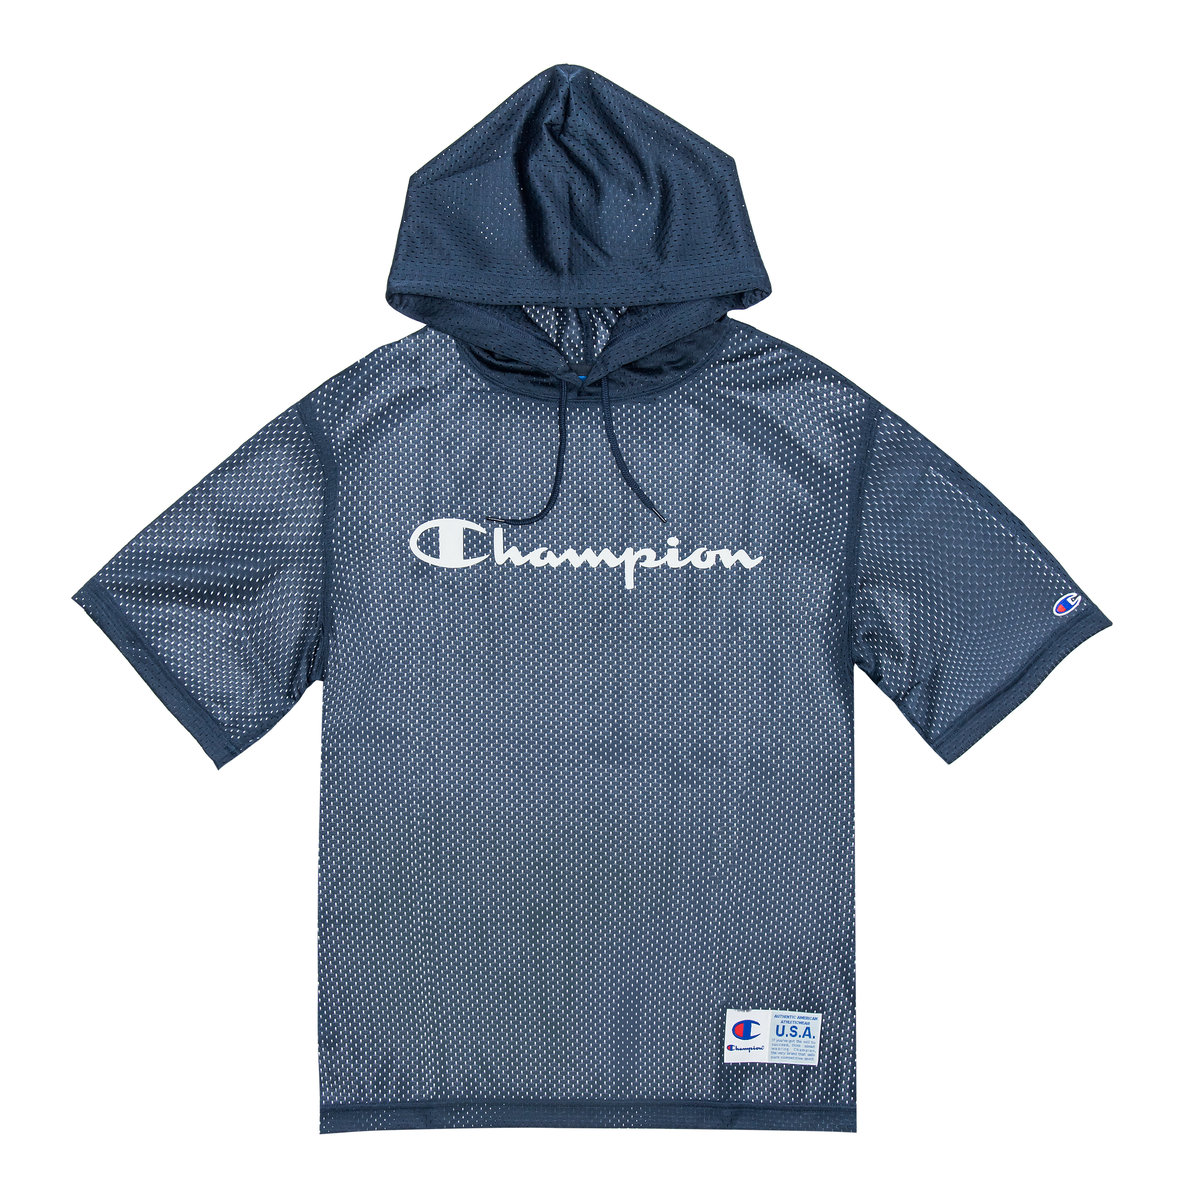 blue and black champion hoodie